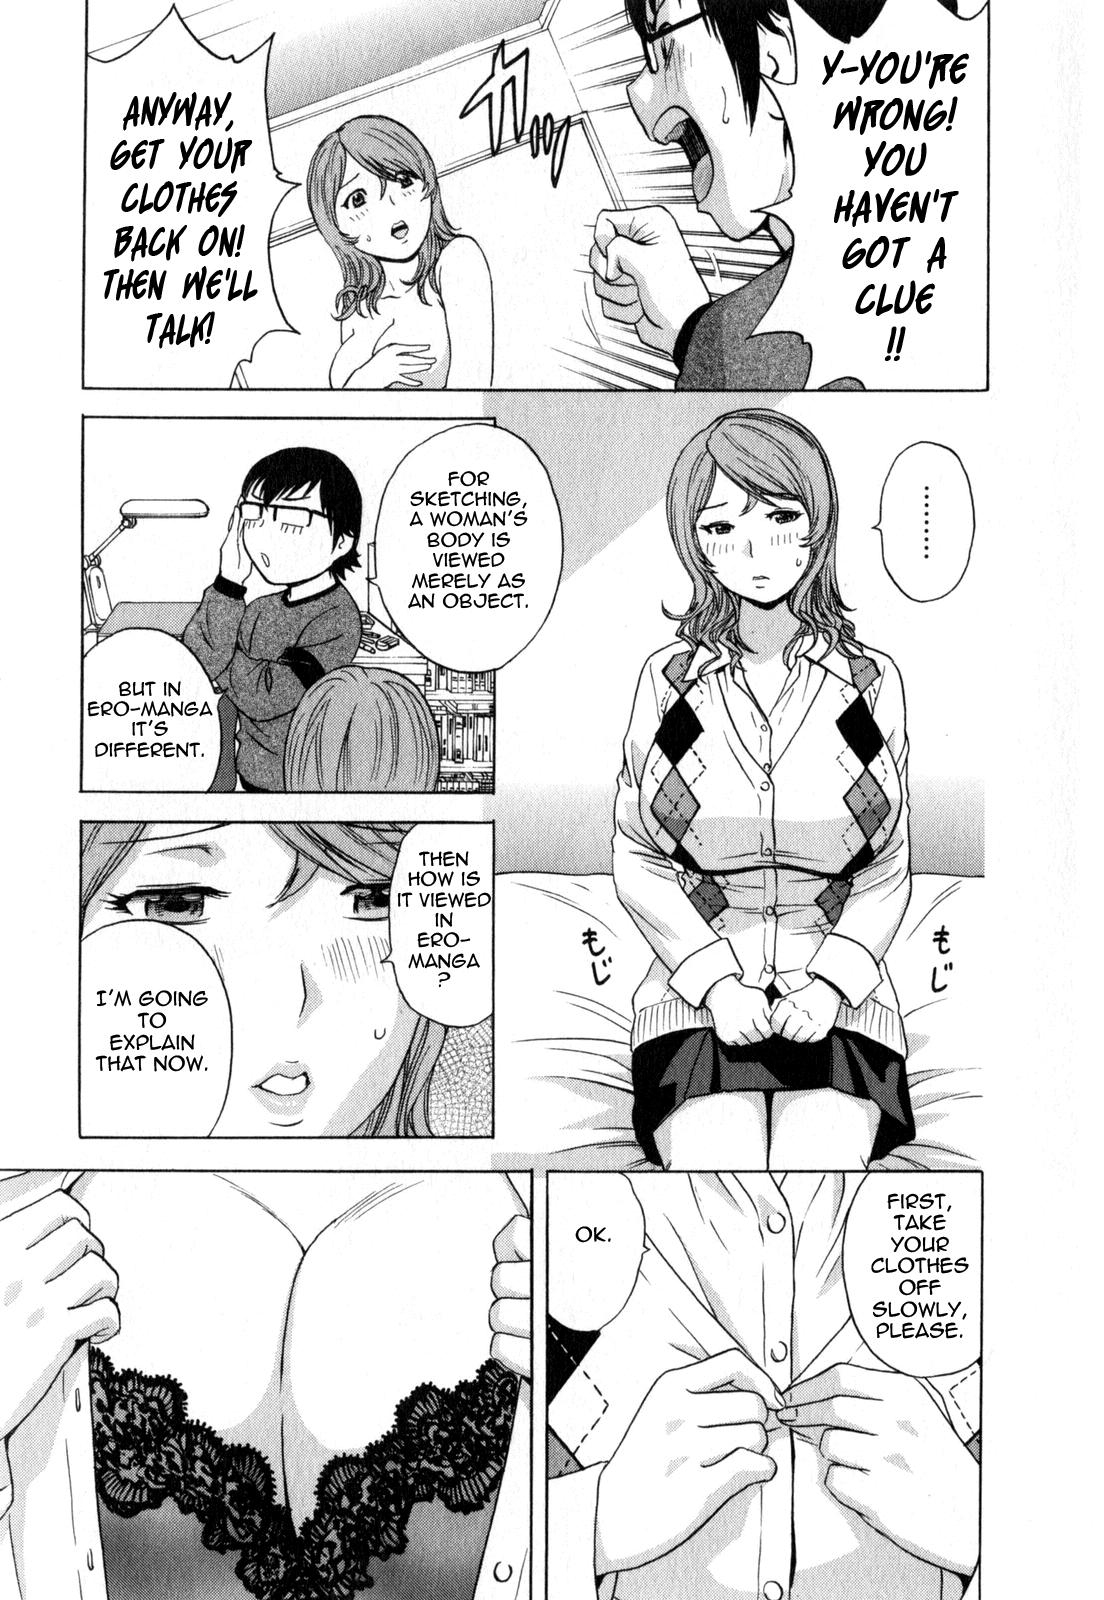 [Hidemaru] Life with Married Women Just Like a Manga 2 - Ch. 1-6 [English] {Tadanohito} 35